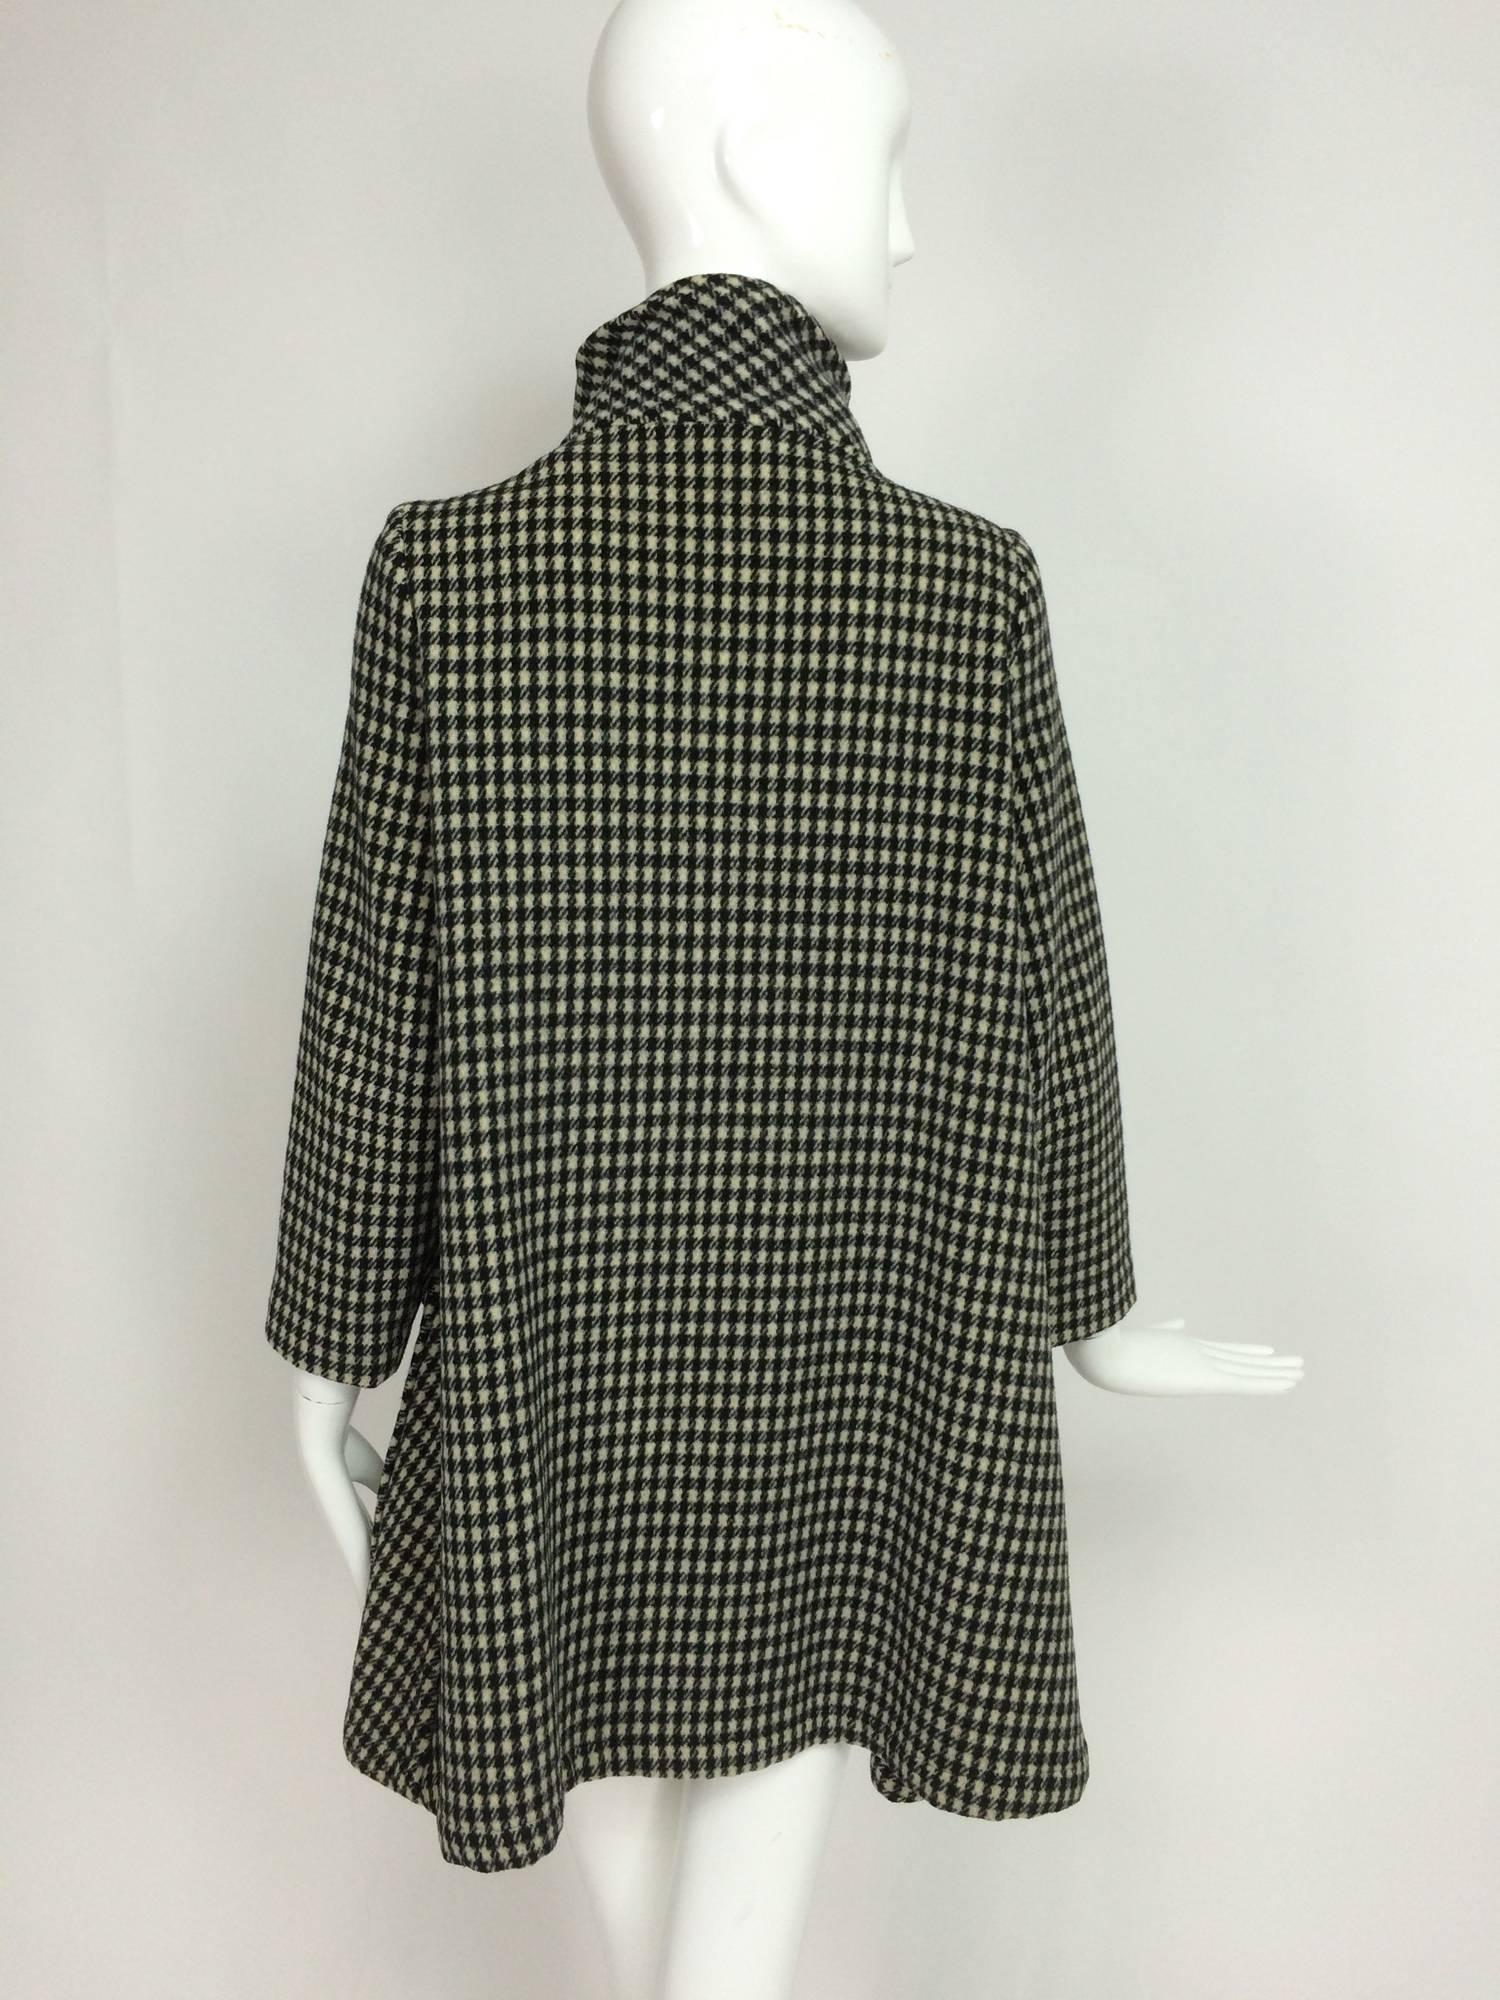 Mod black & white check zip front mini tent coat 1960s Jordan Marsh England 4